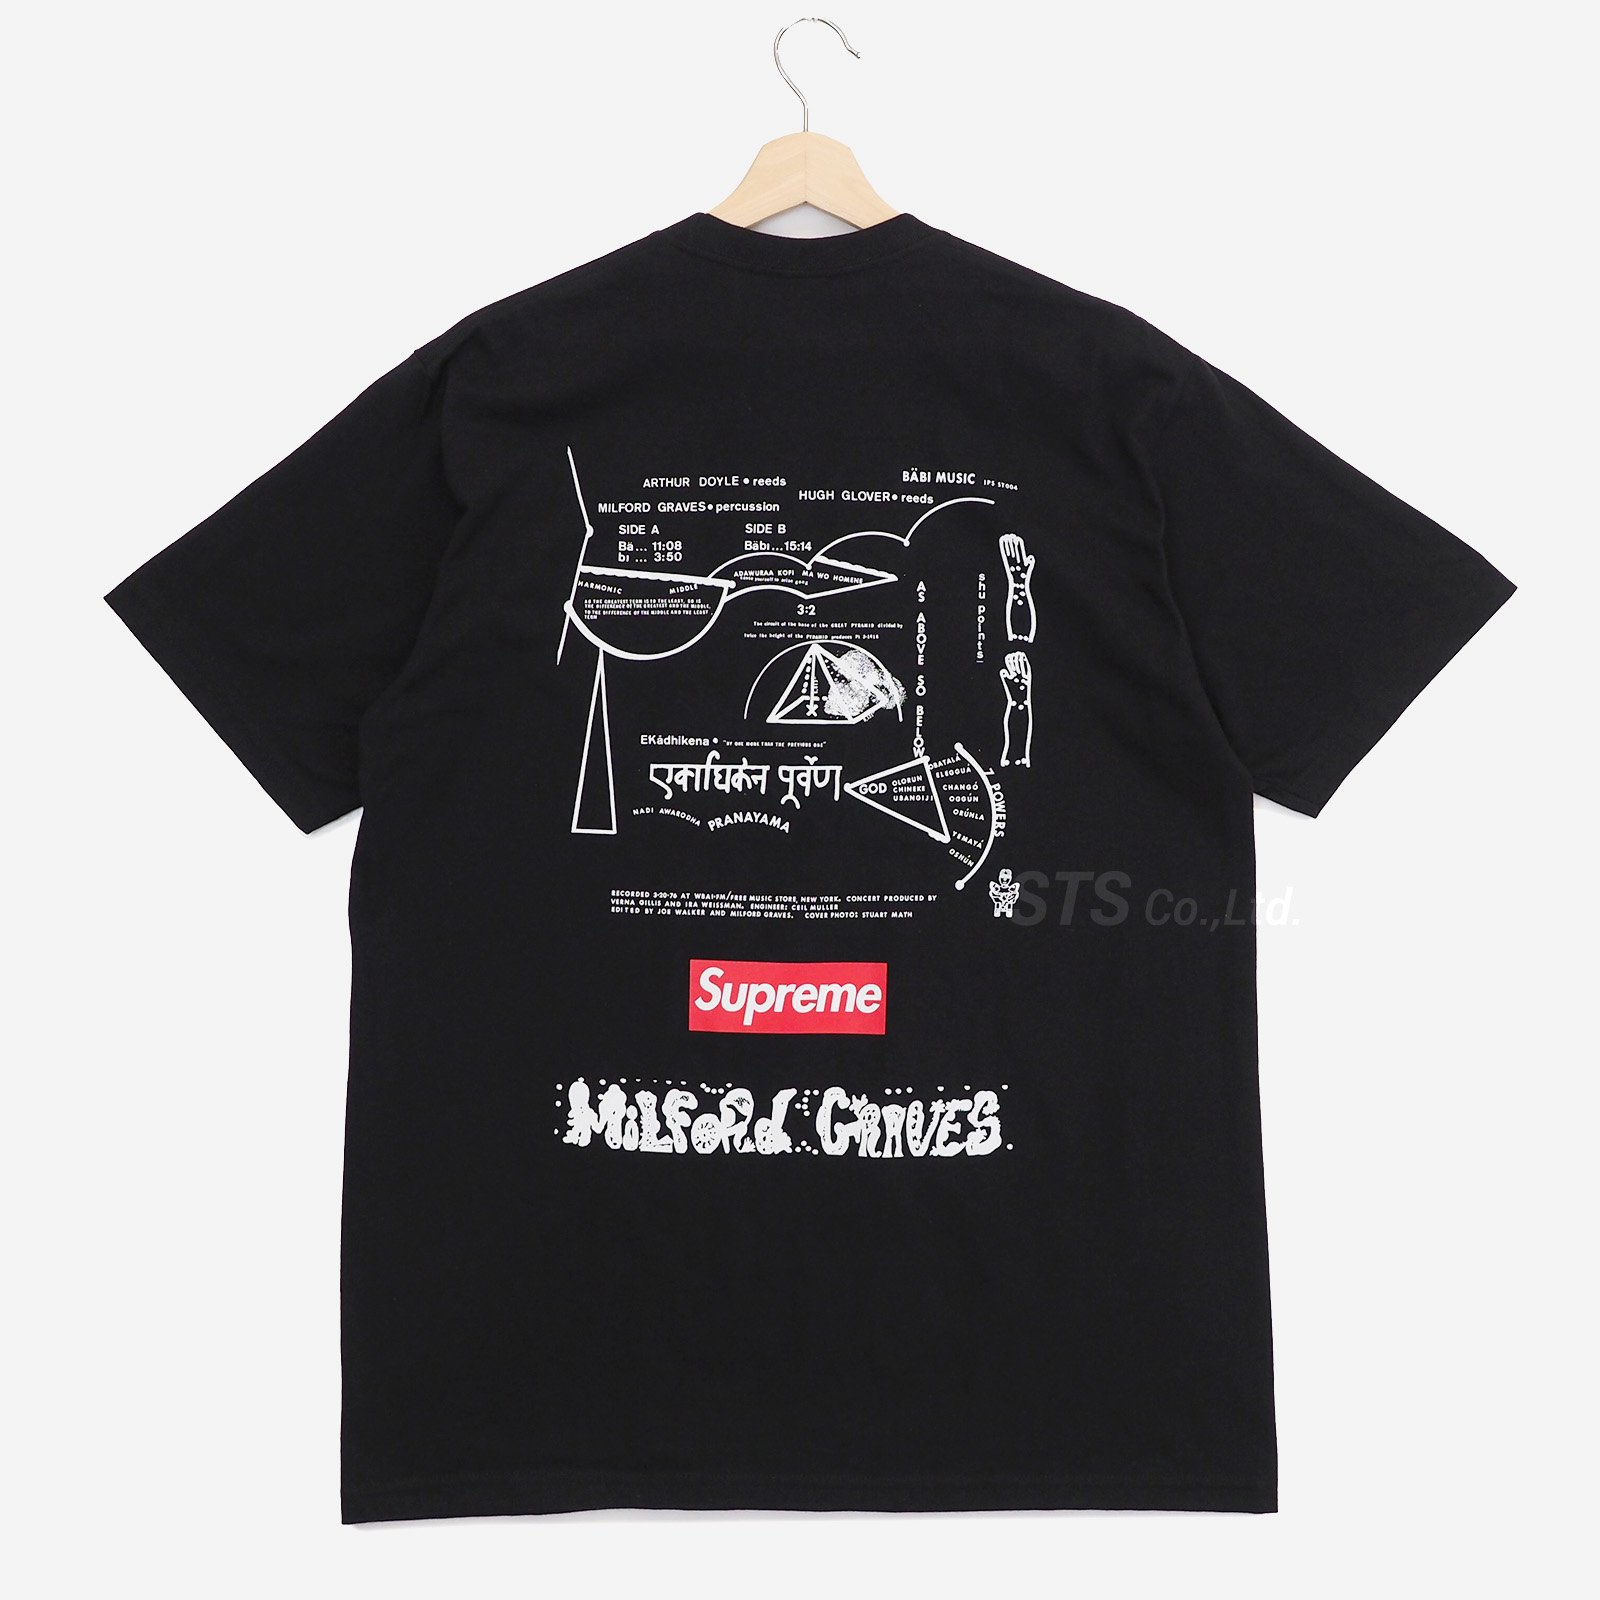 Tシャツ/カットソー(半袖/袖なし)シュプリーム Supreme Milford Graves Tee